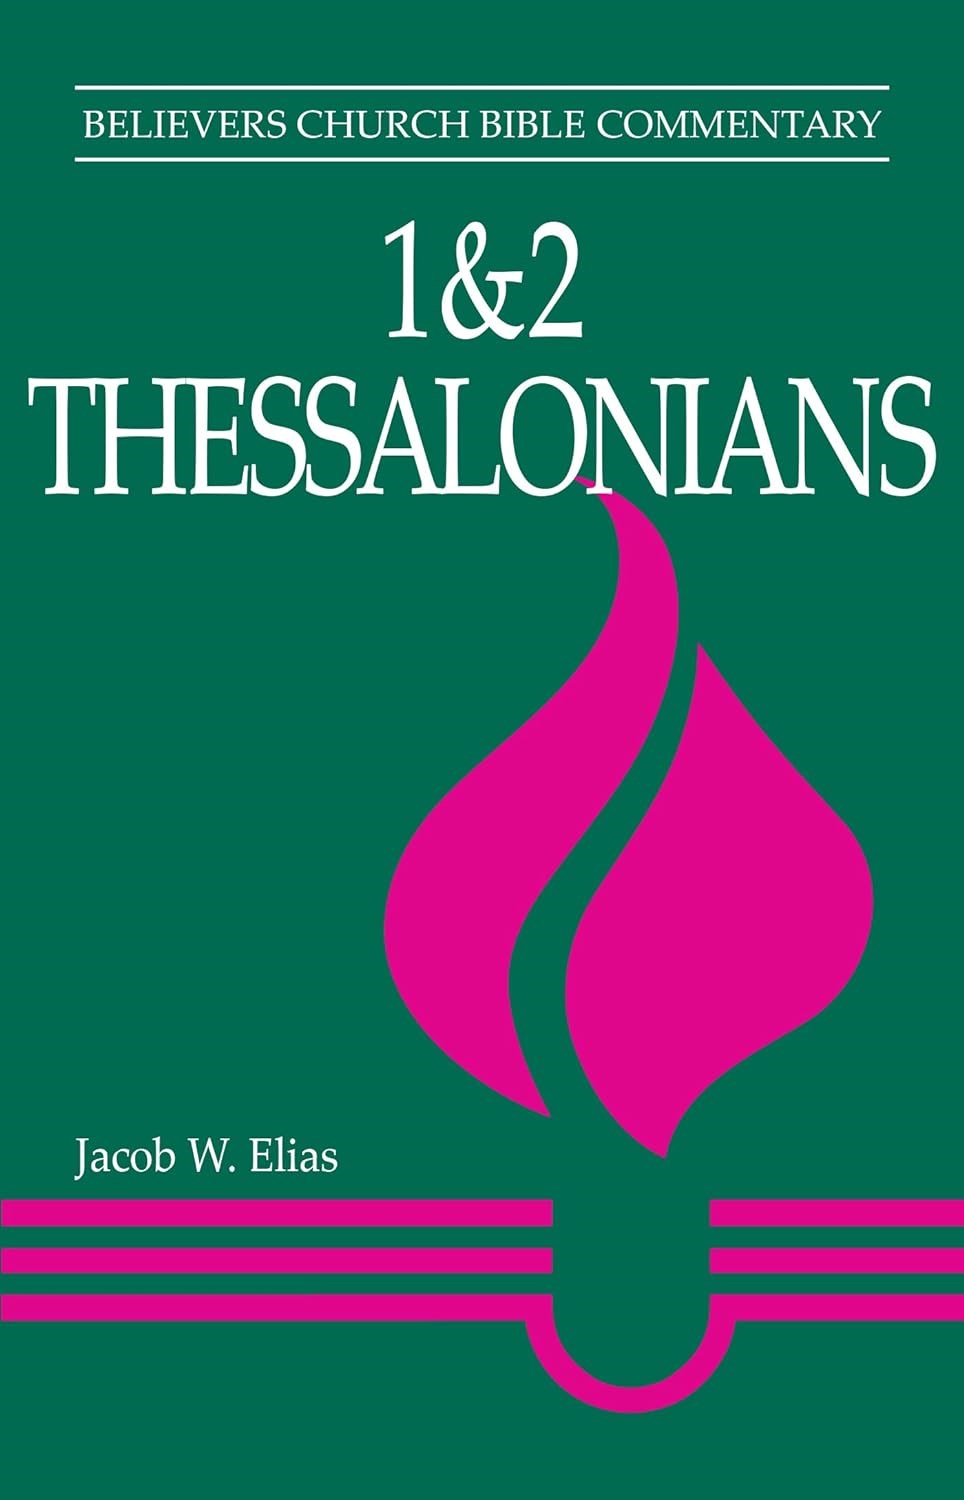 1 &amp; 2 Thessalonians